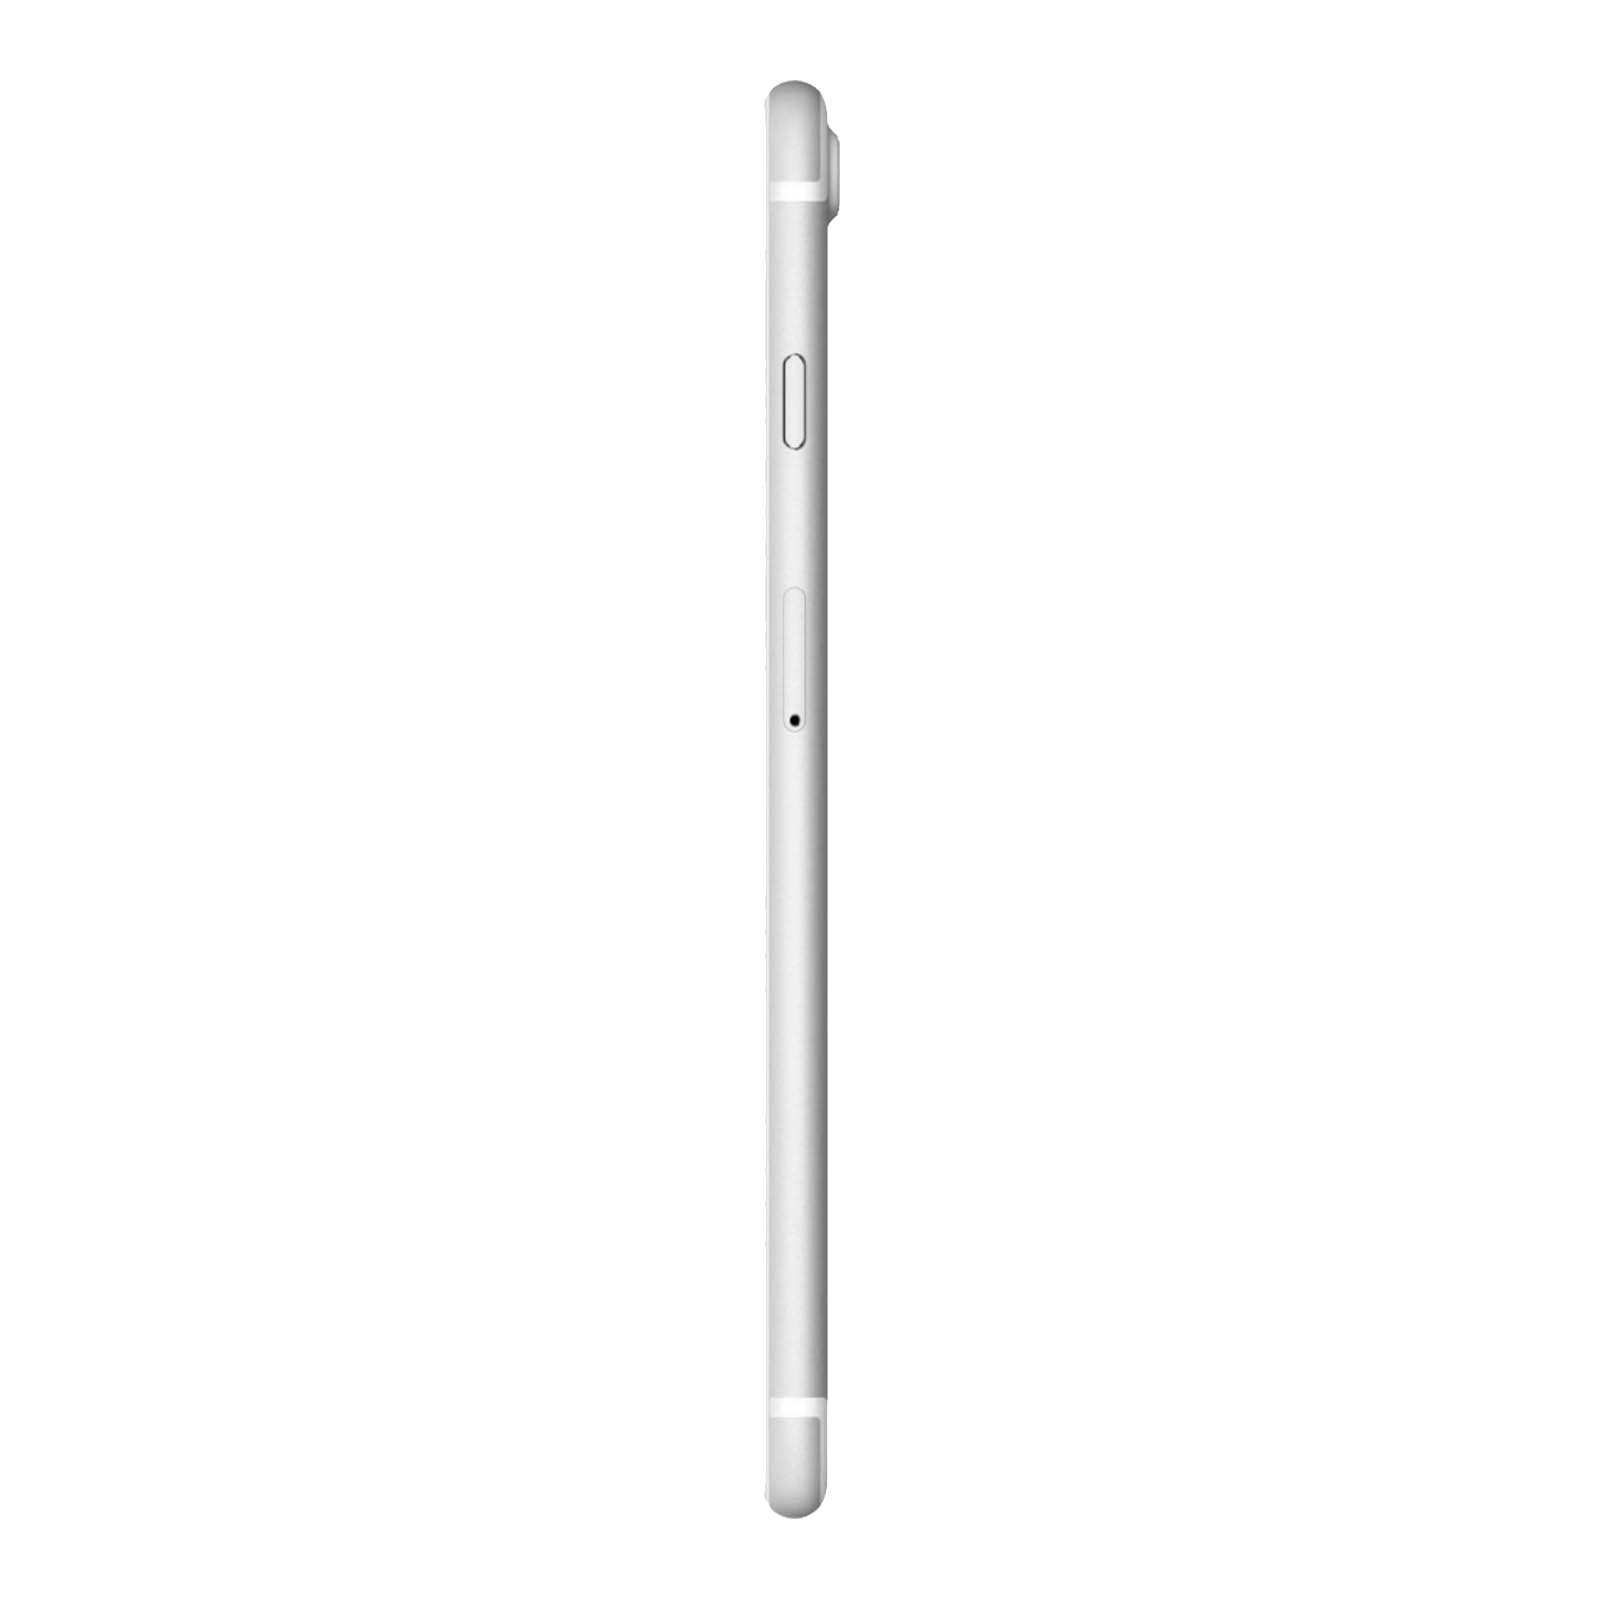 Apple iPhone 7 32GB Silver Very Good - Unlocked